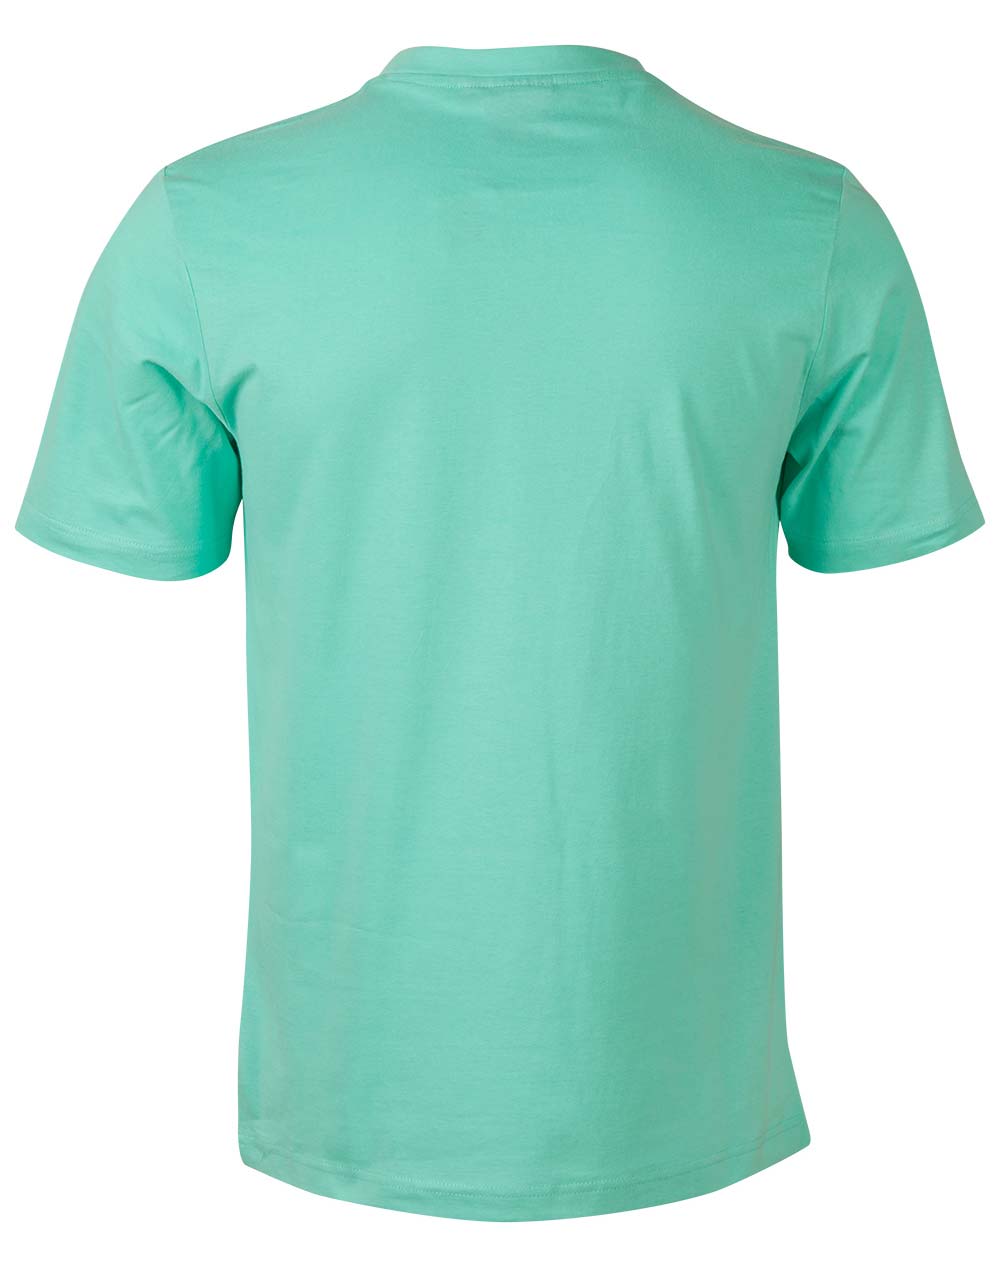 Custom (Fluoro Orange) Semi-Fitted T-Shirts Men's Cotton Online in Perth Australia